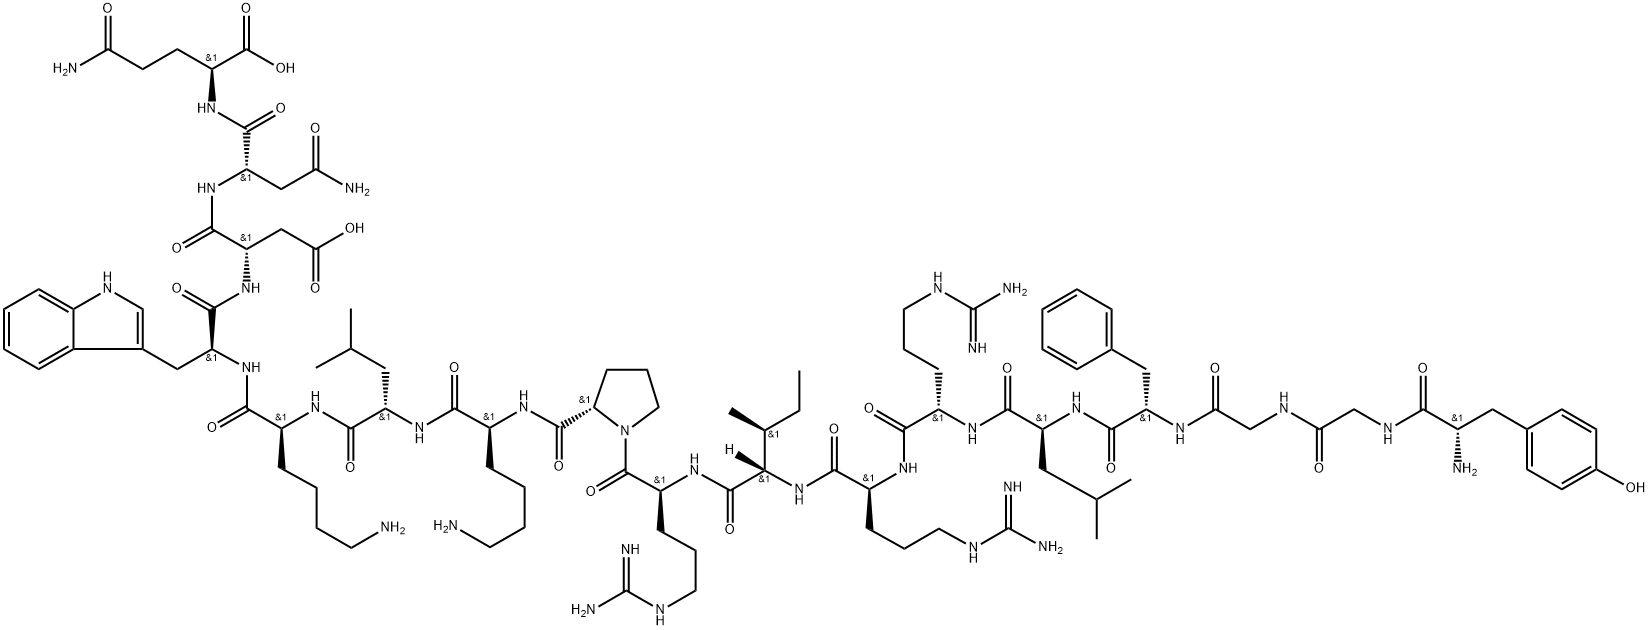 TYR-GLY-GLY-PHE-LEU-ARG-ARG-ILE-ARG-PRO-LYS-LEU-LYS-TRP-ASP-ASN-GLN-NH2 Struktur